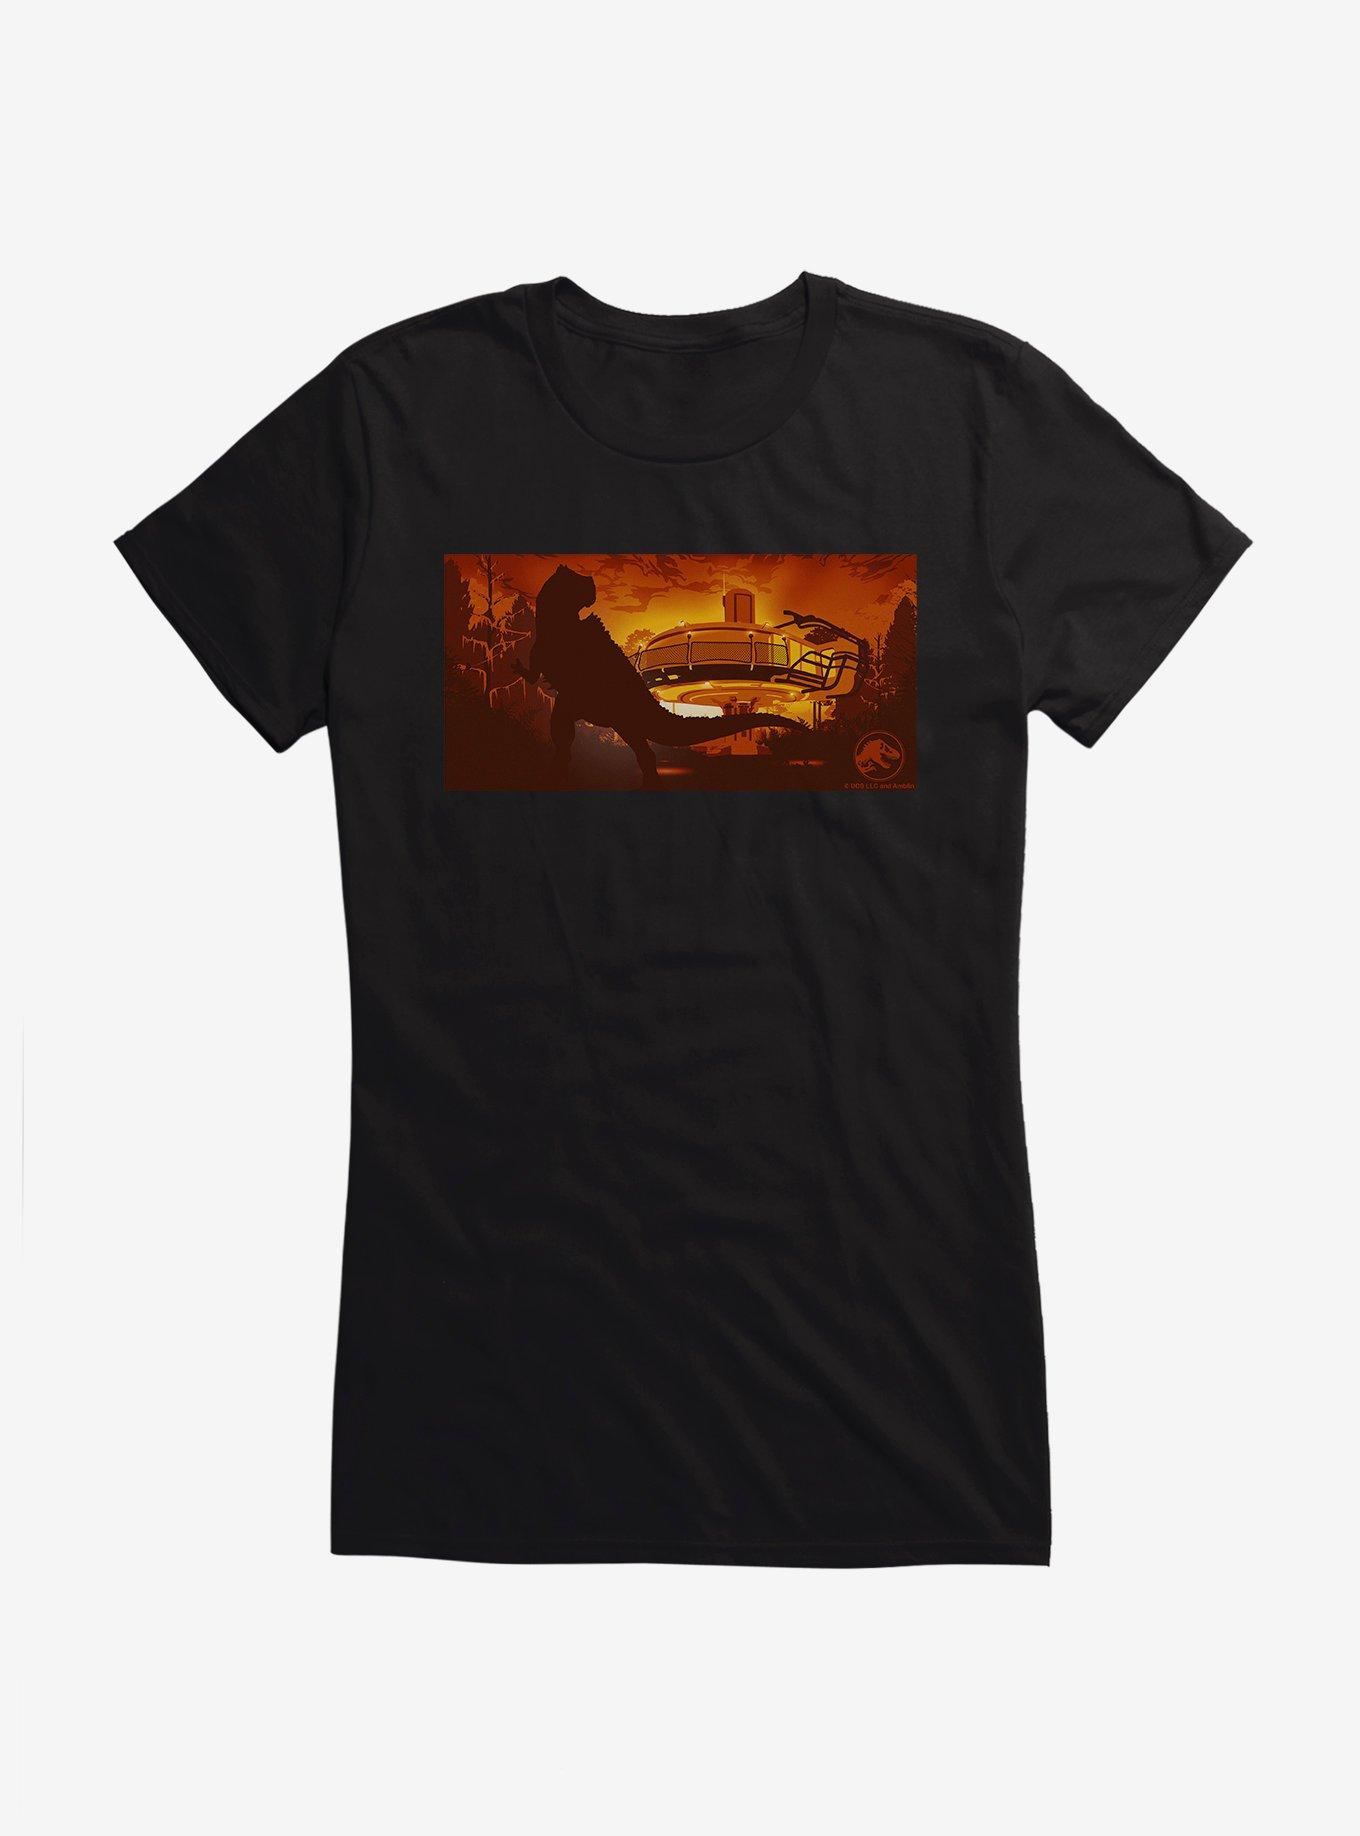 Jurassic World Dominion T-Rex Shadow Girls T-Shirt